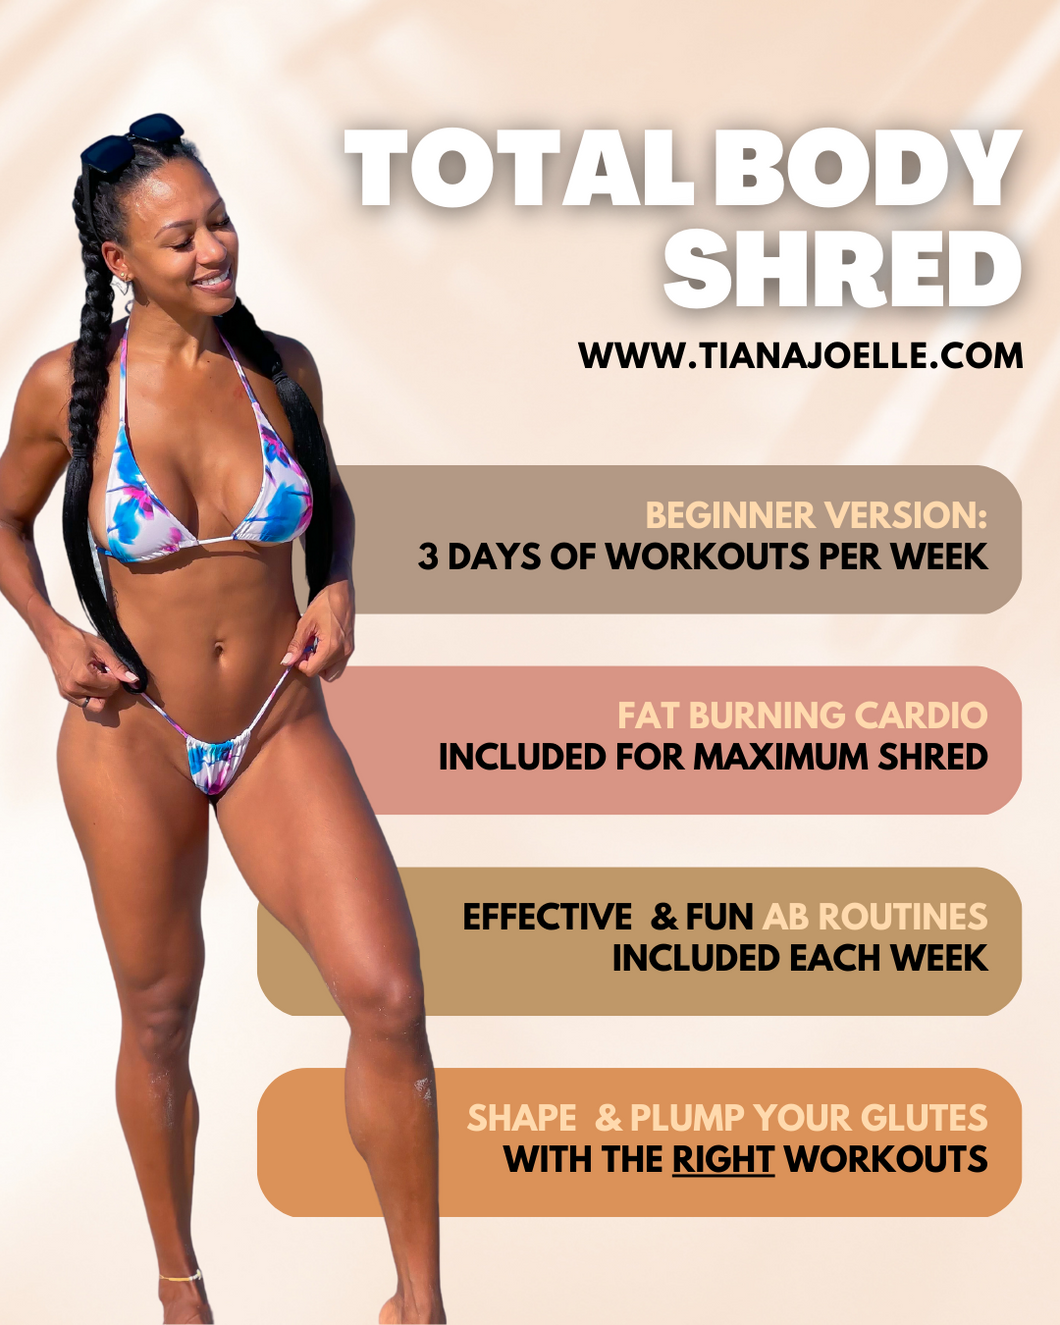 Full Body Intermediate Workout Routine